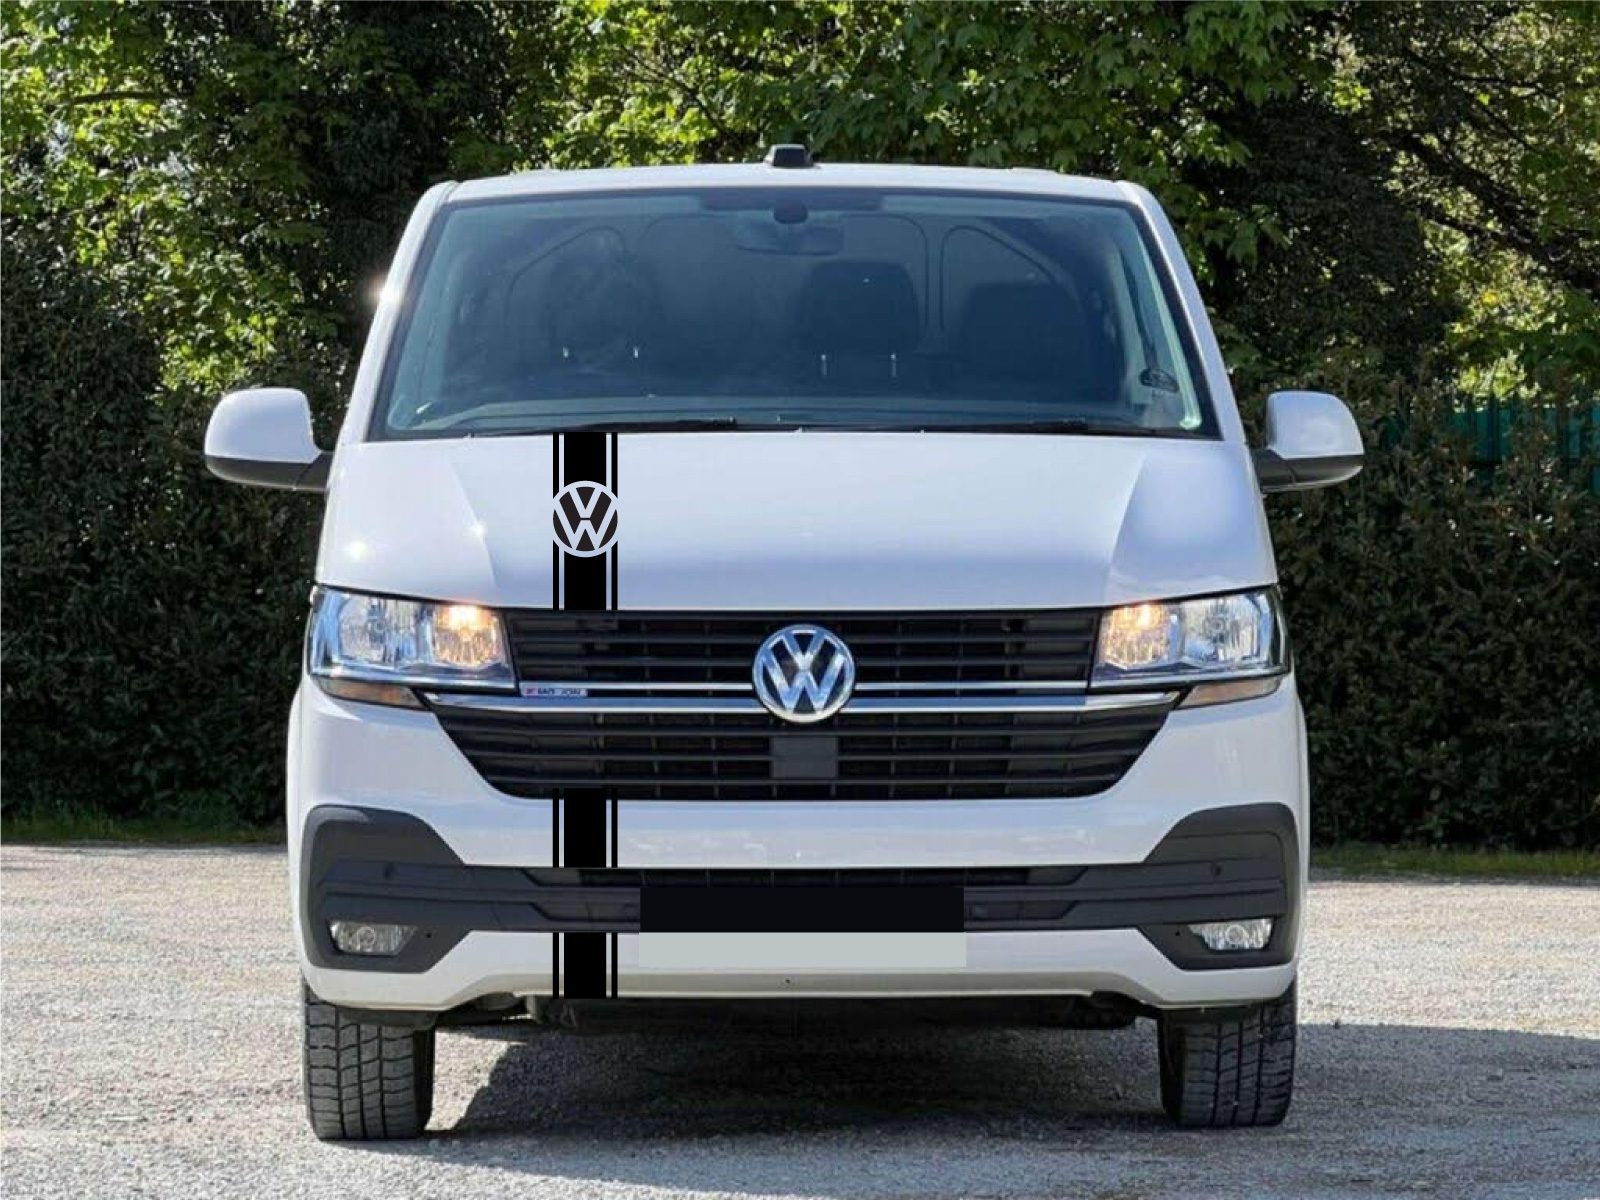 Volkswagen Bonnet Stripe